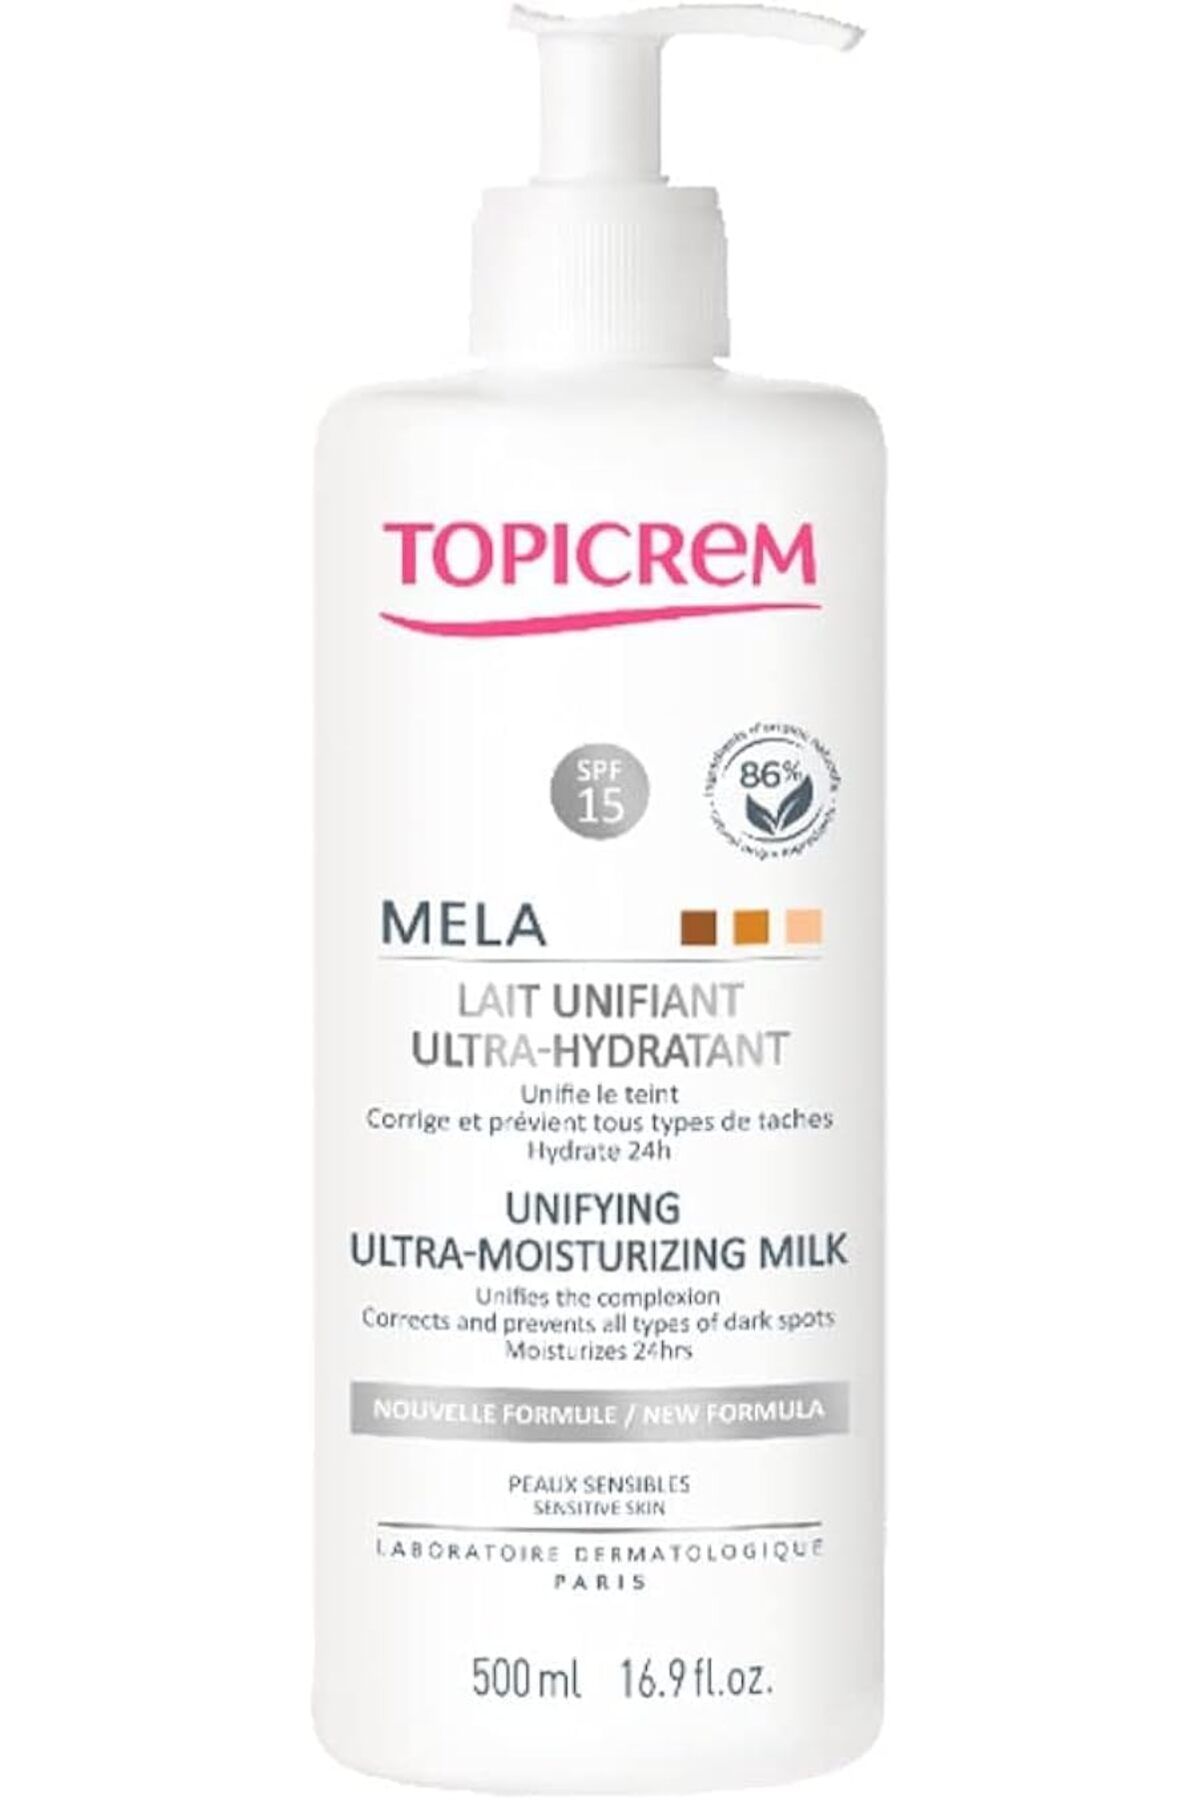 Topicrem Mela Lightening Ultra-moisturizing Milk 500 ml